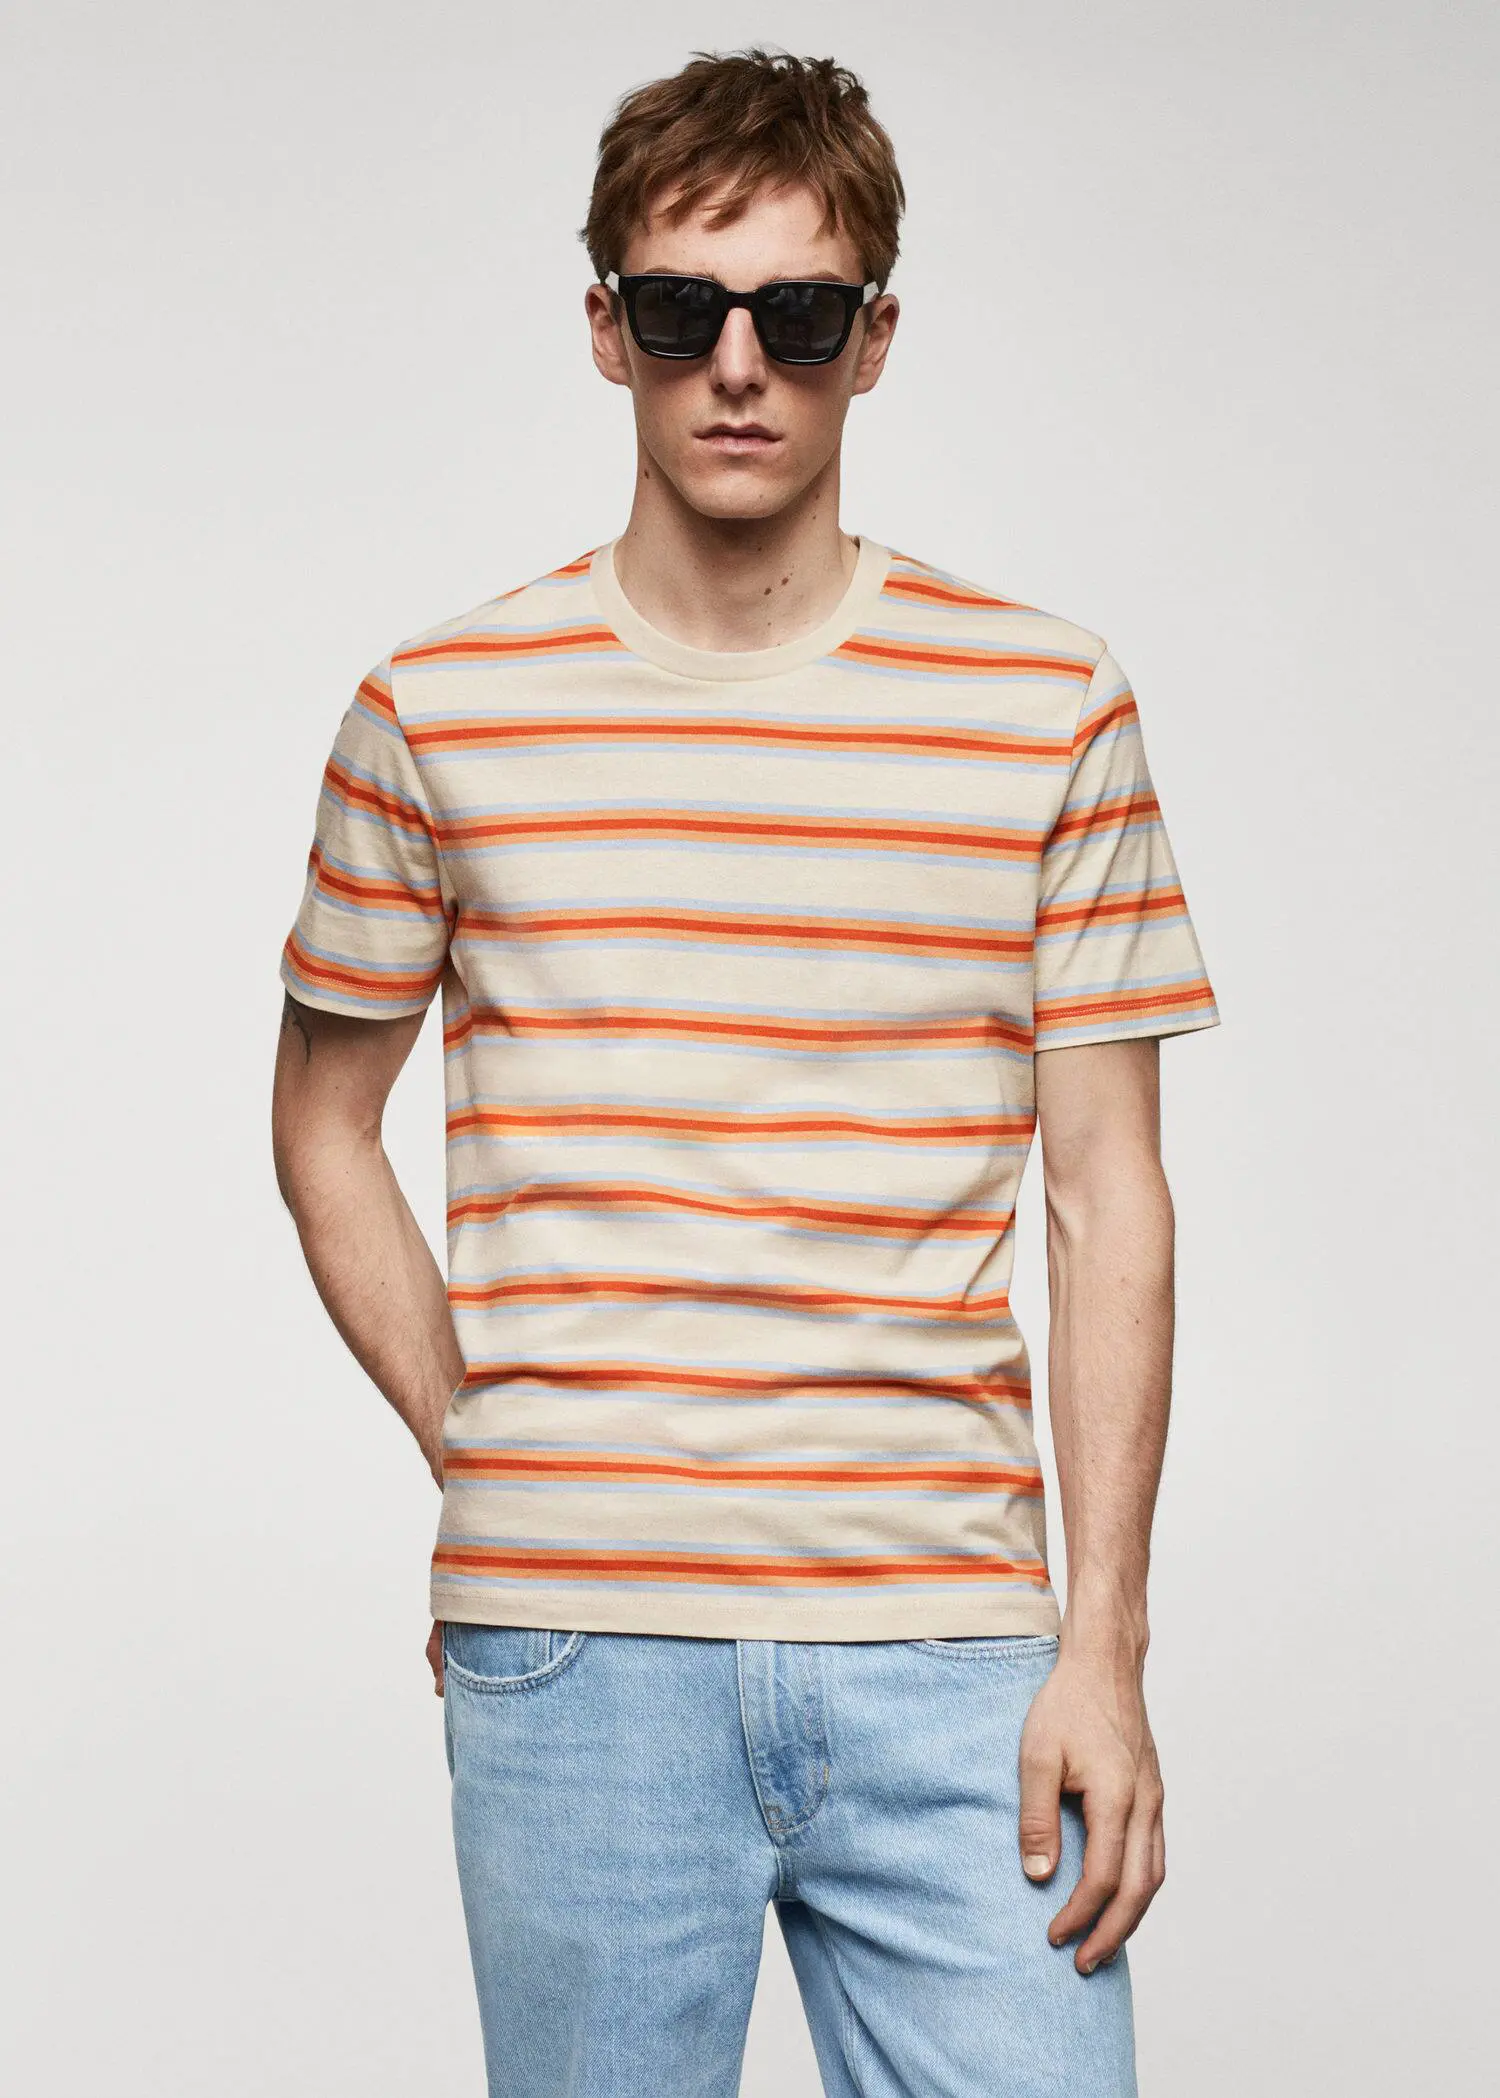 Mango Striped 100% cotton t-shirt. 1